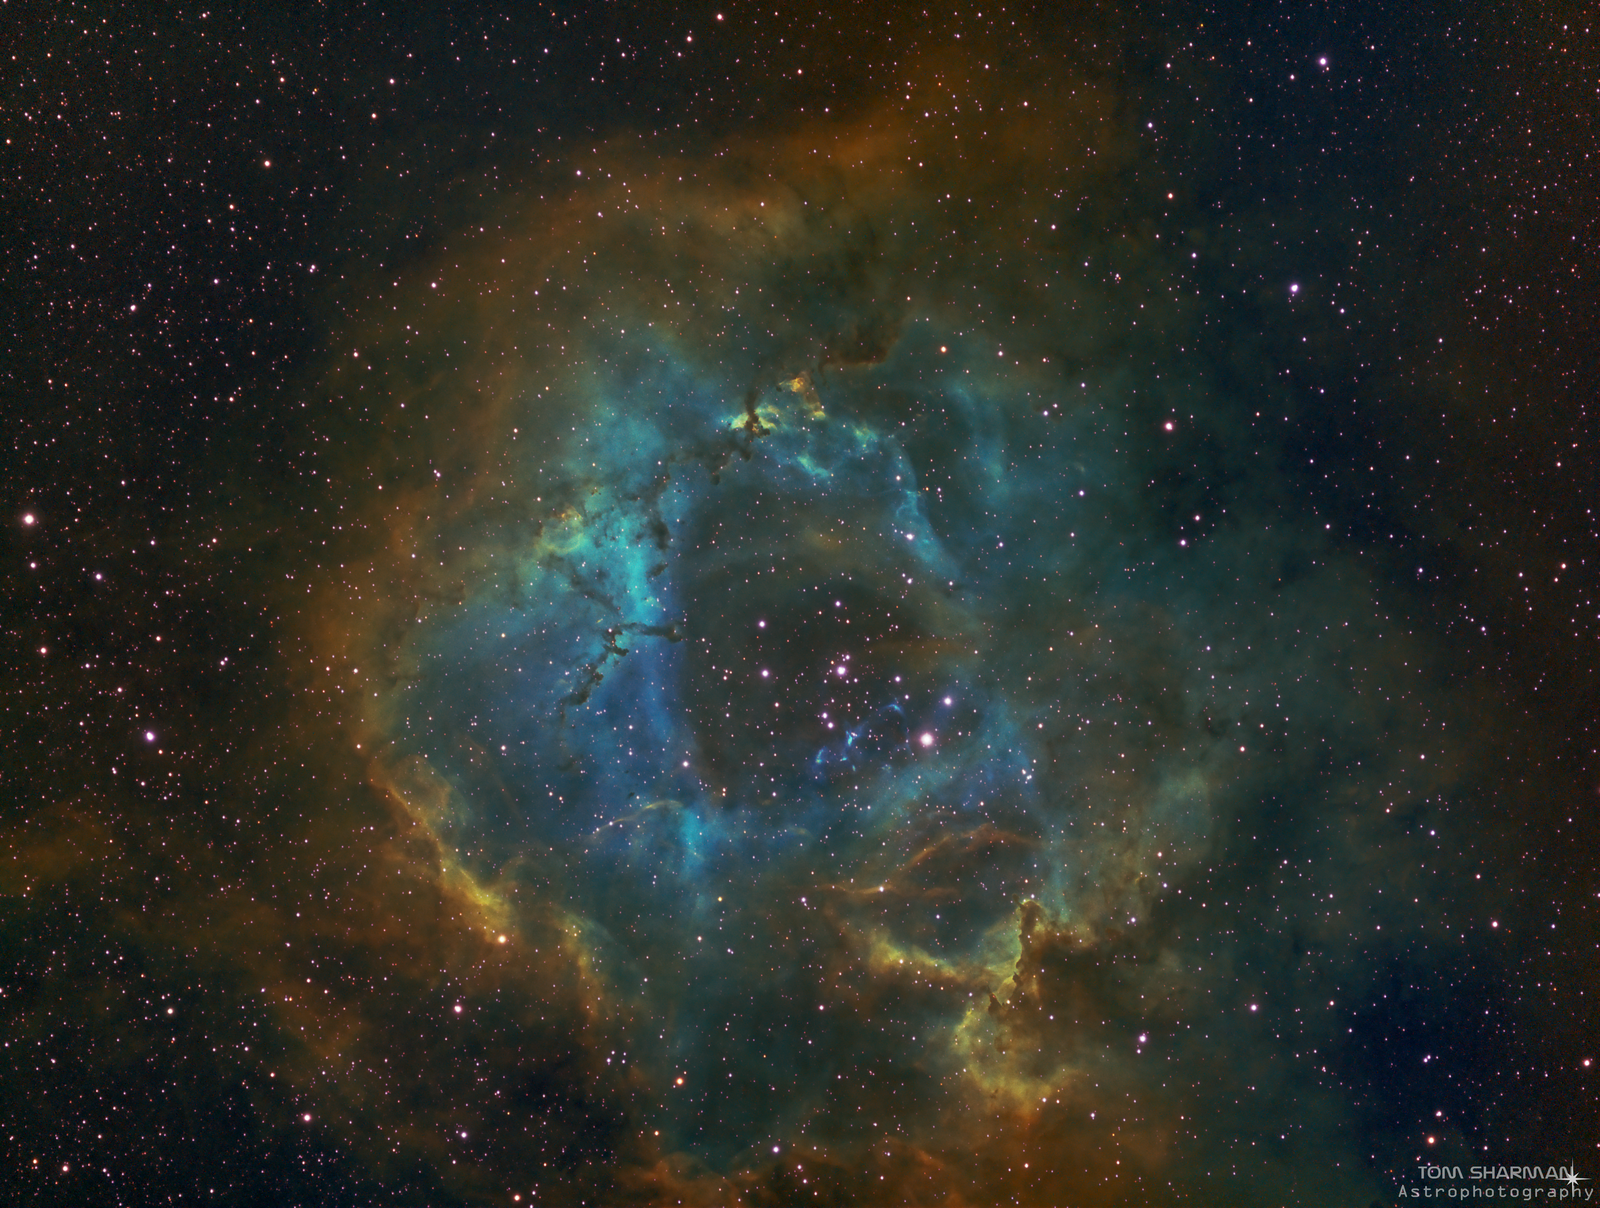 NGC-2239 Aka Rosette Nebula